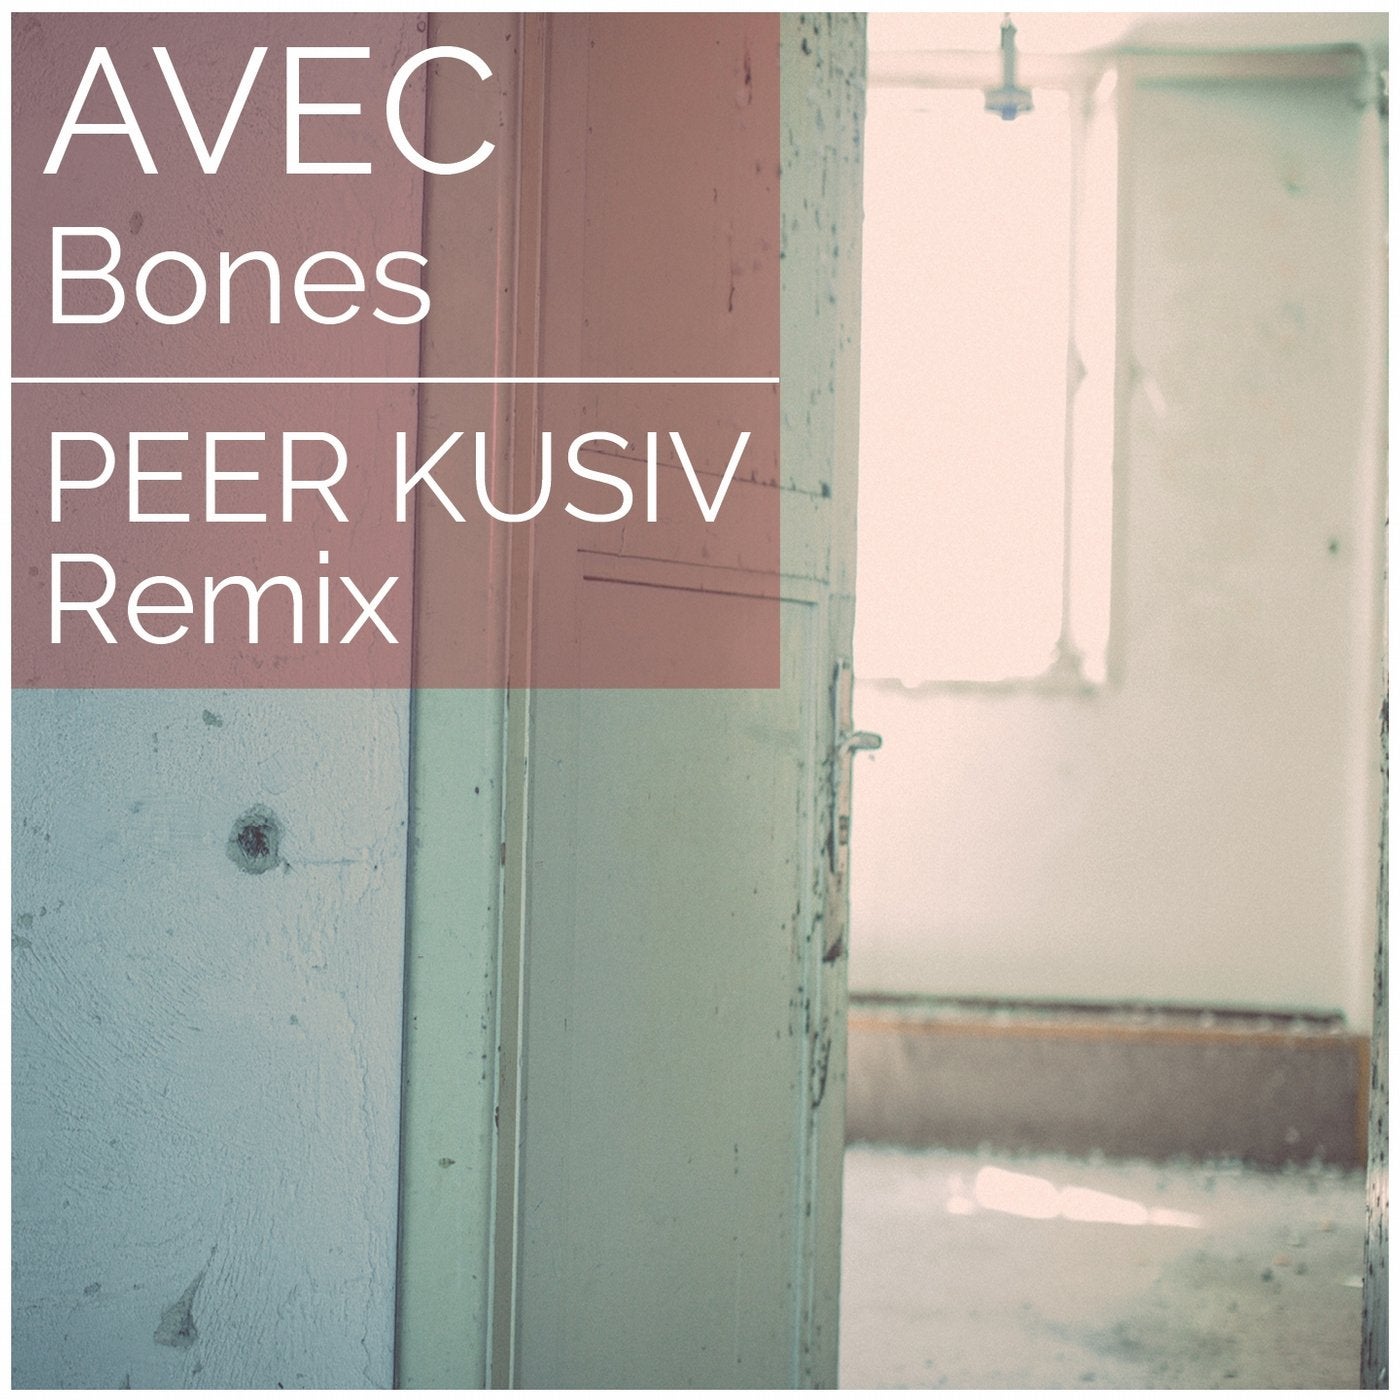 Bones (Peer Kusiv Remix)